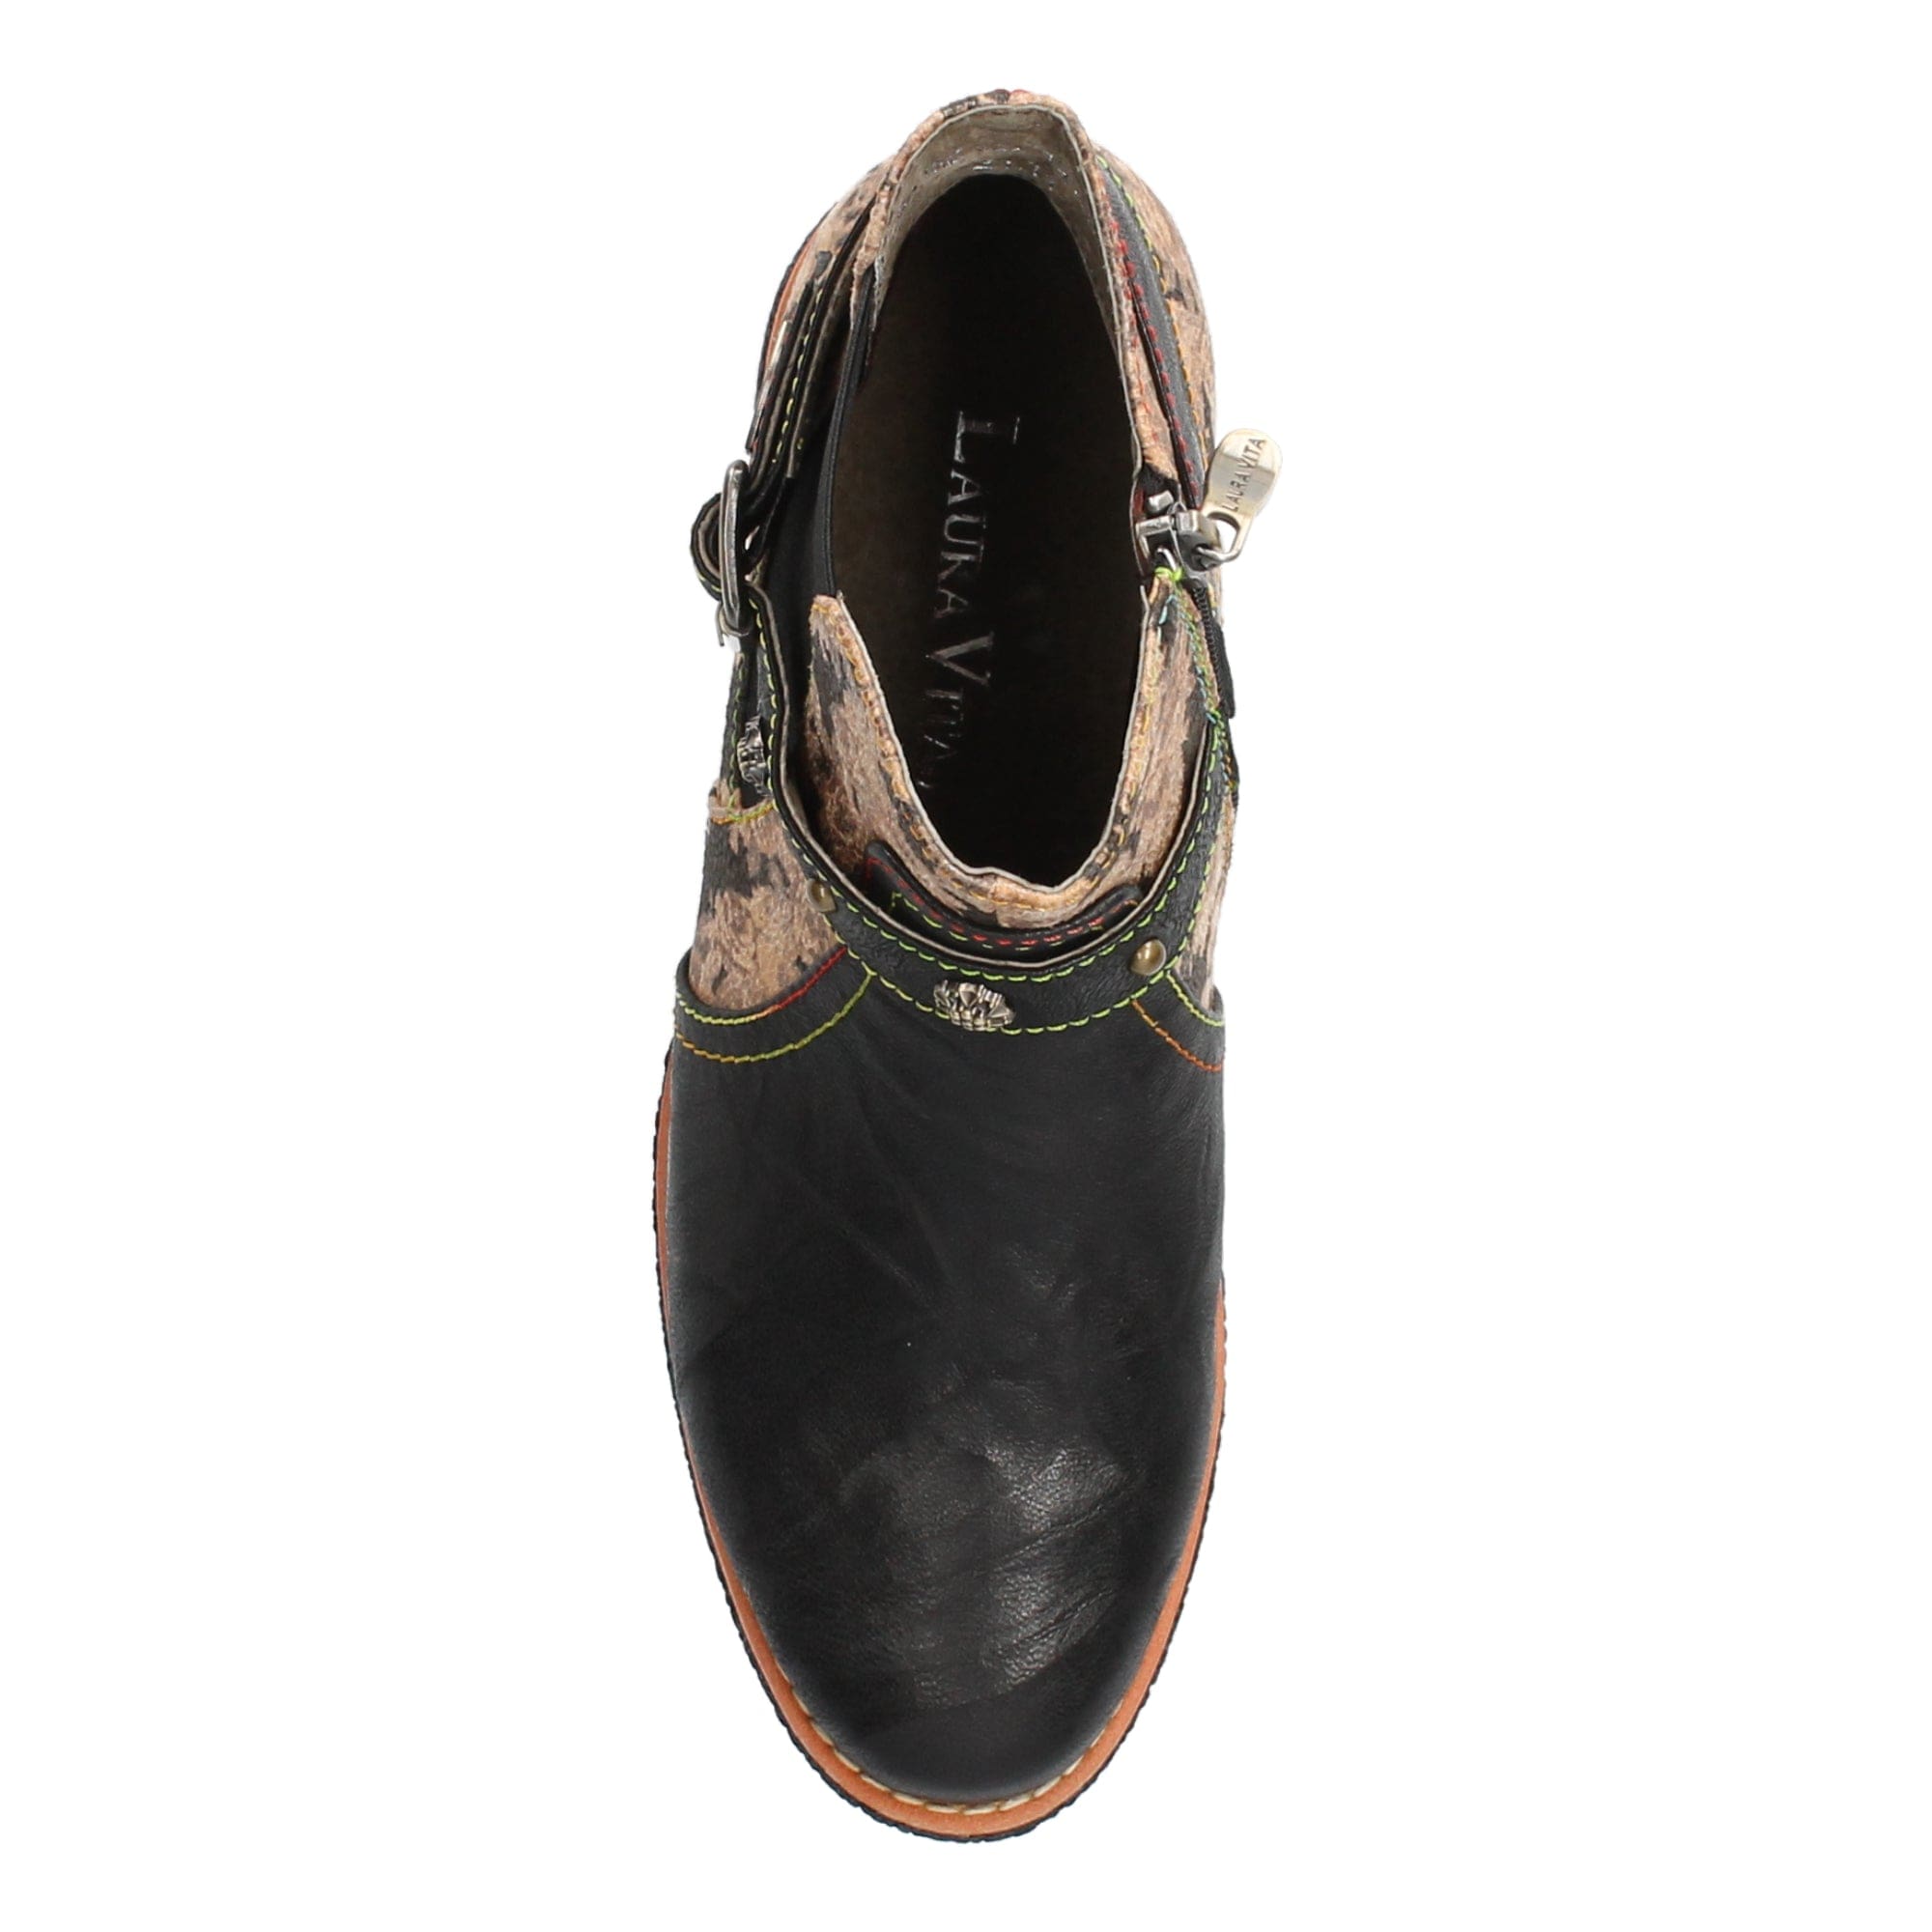 Shoe COCRALIEO 04K - Boots